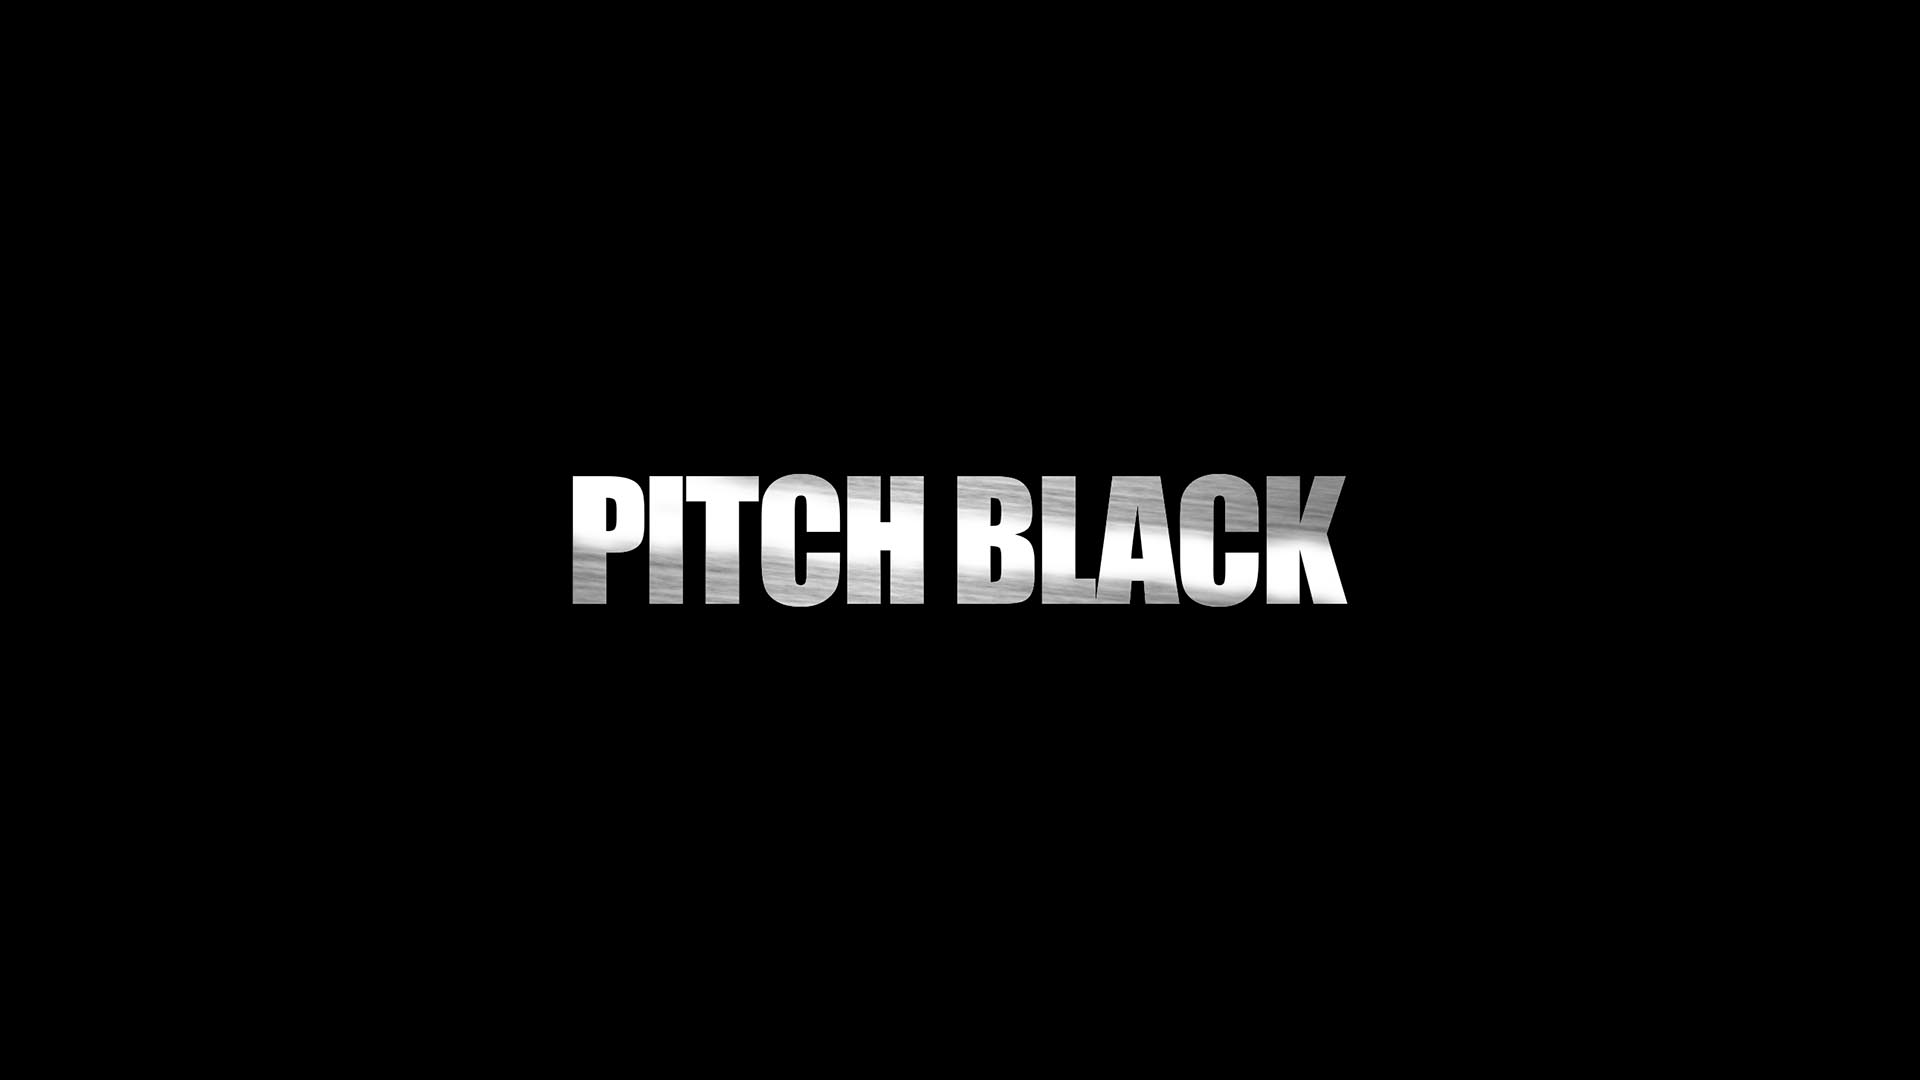 Pitch Black Full HD Fond d'écran and Arrière-plan | 1920x1080 | ID:523112